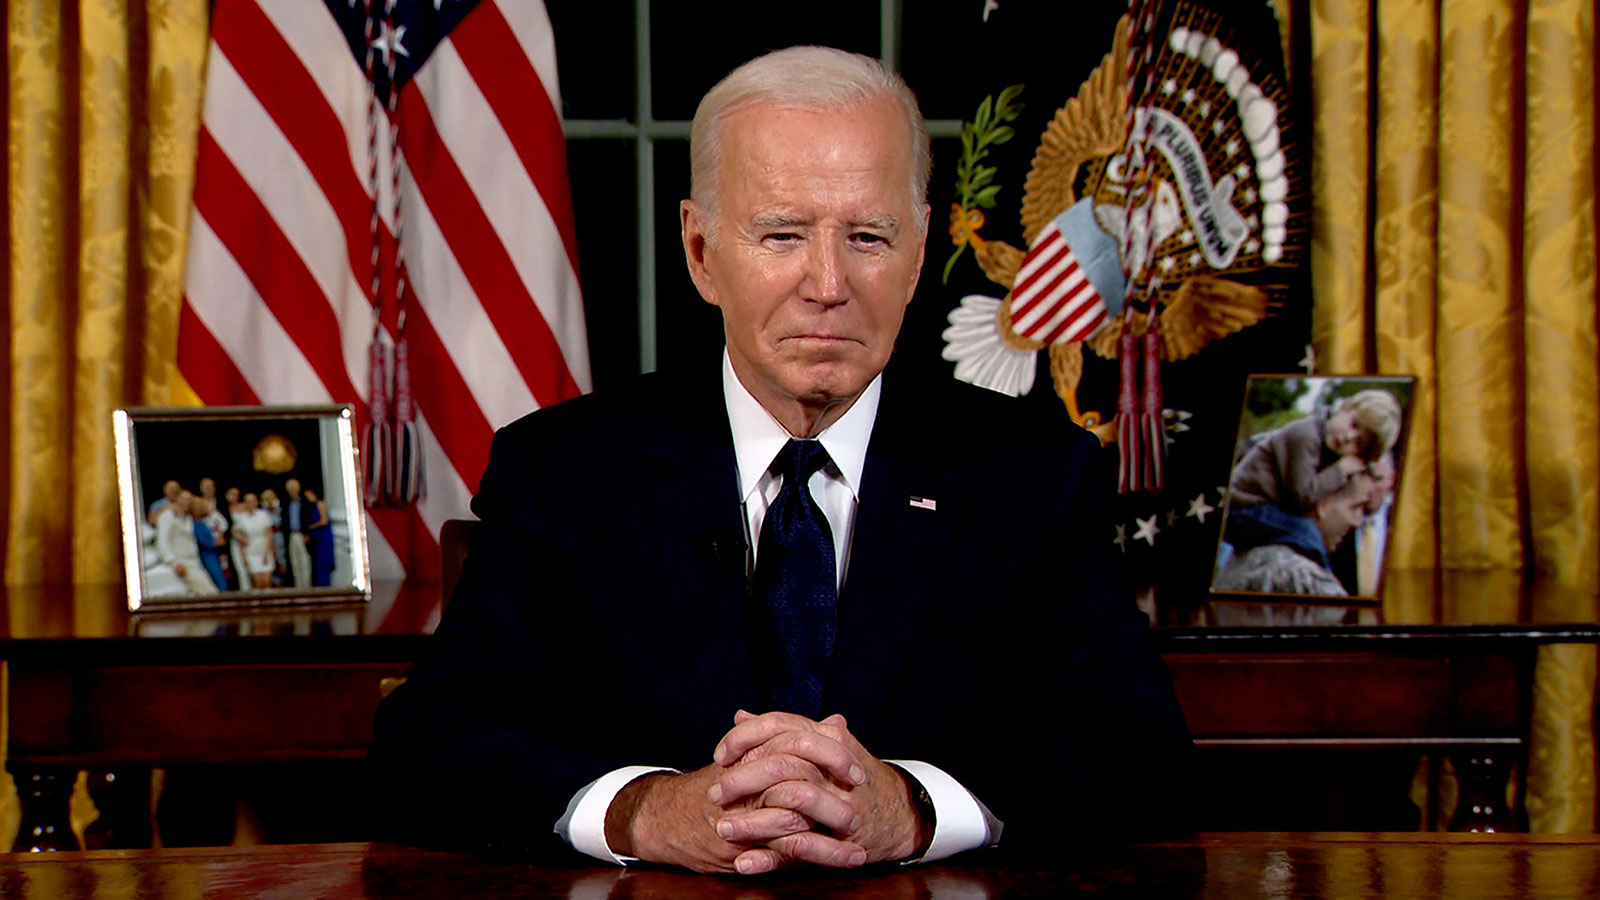 Biden speaks during an address from the Oval Office on Thursday, October 19.